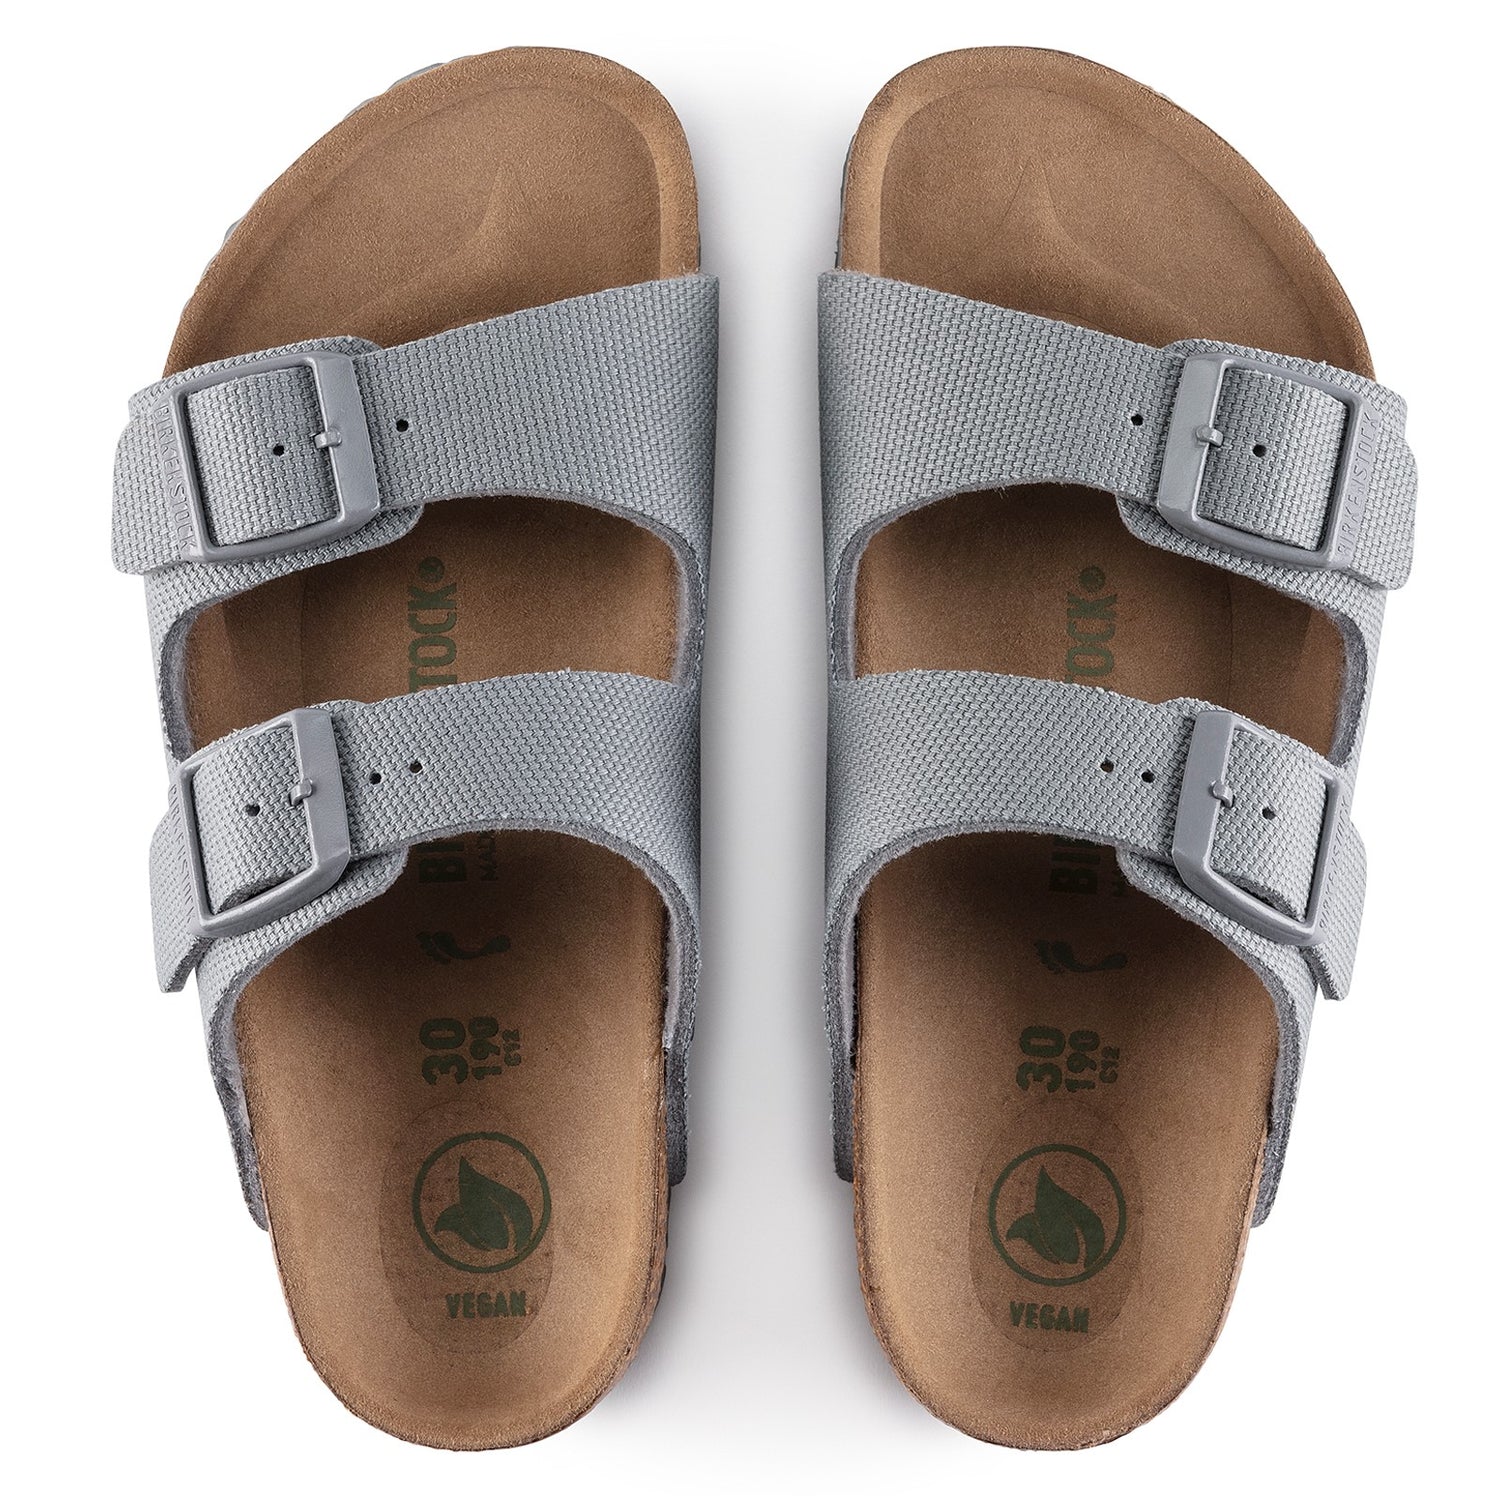 Peltz Shoes  Women's Birkenstock Arizona Vegan Slide Sandal - Narrow Width STONE 1021 454 N